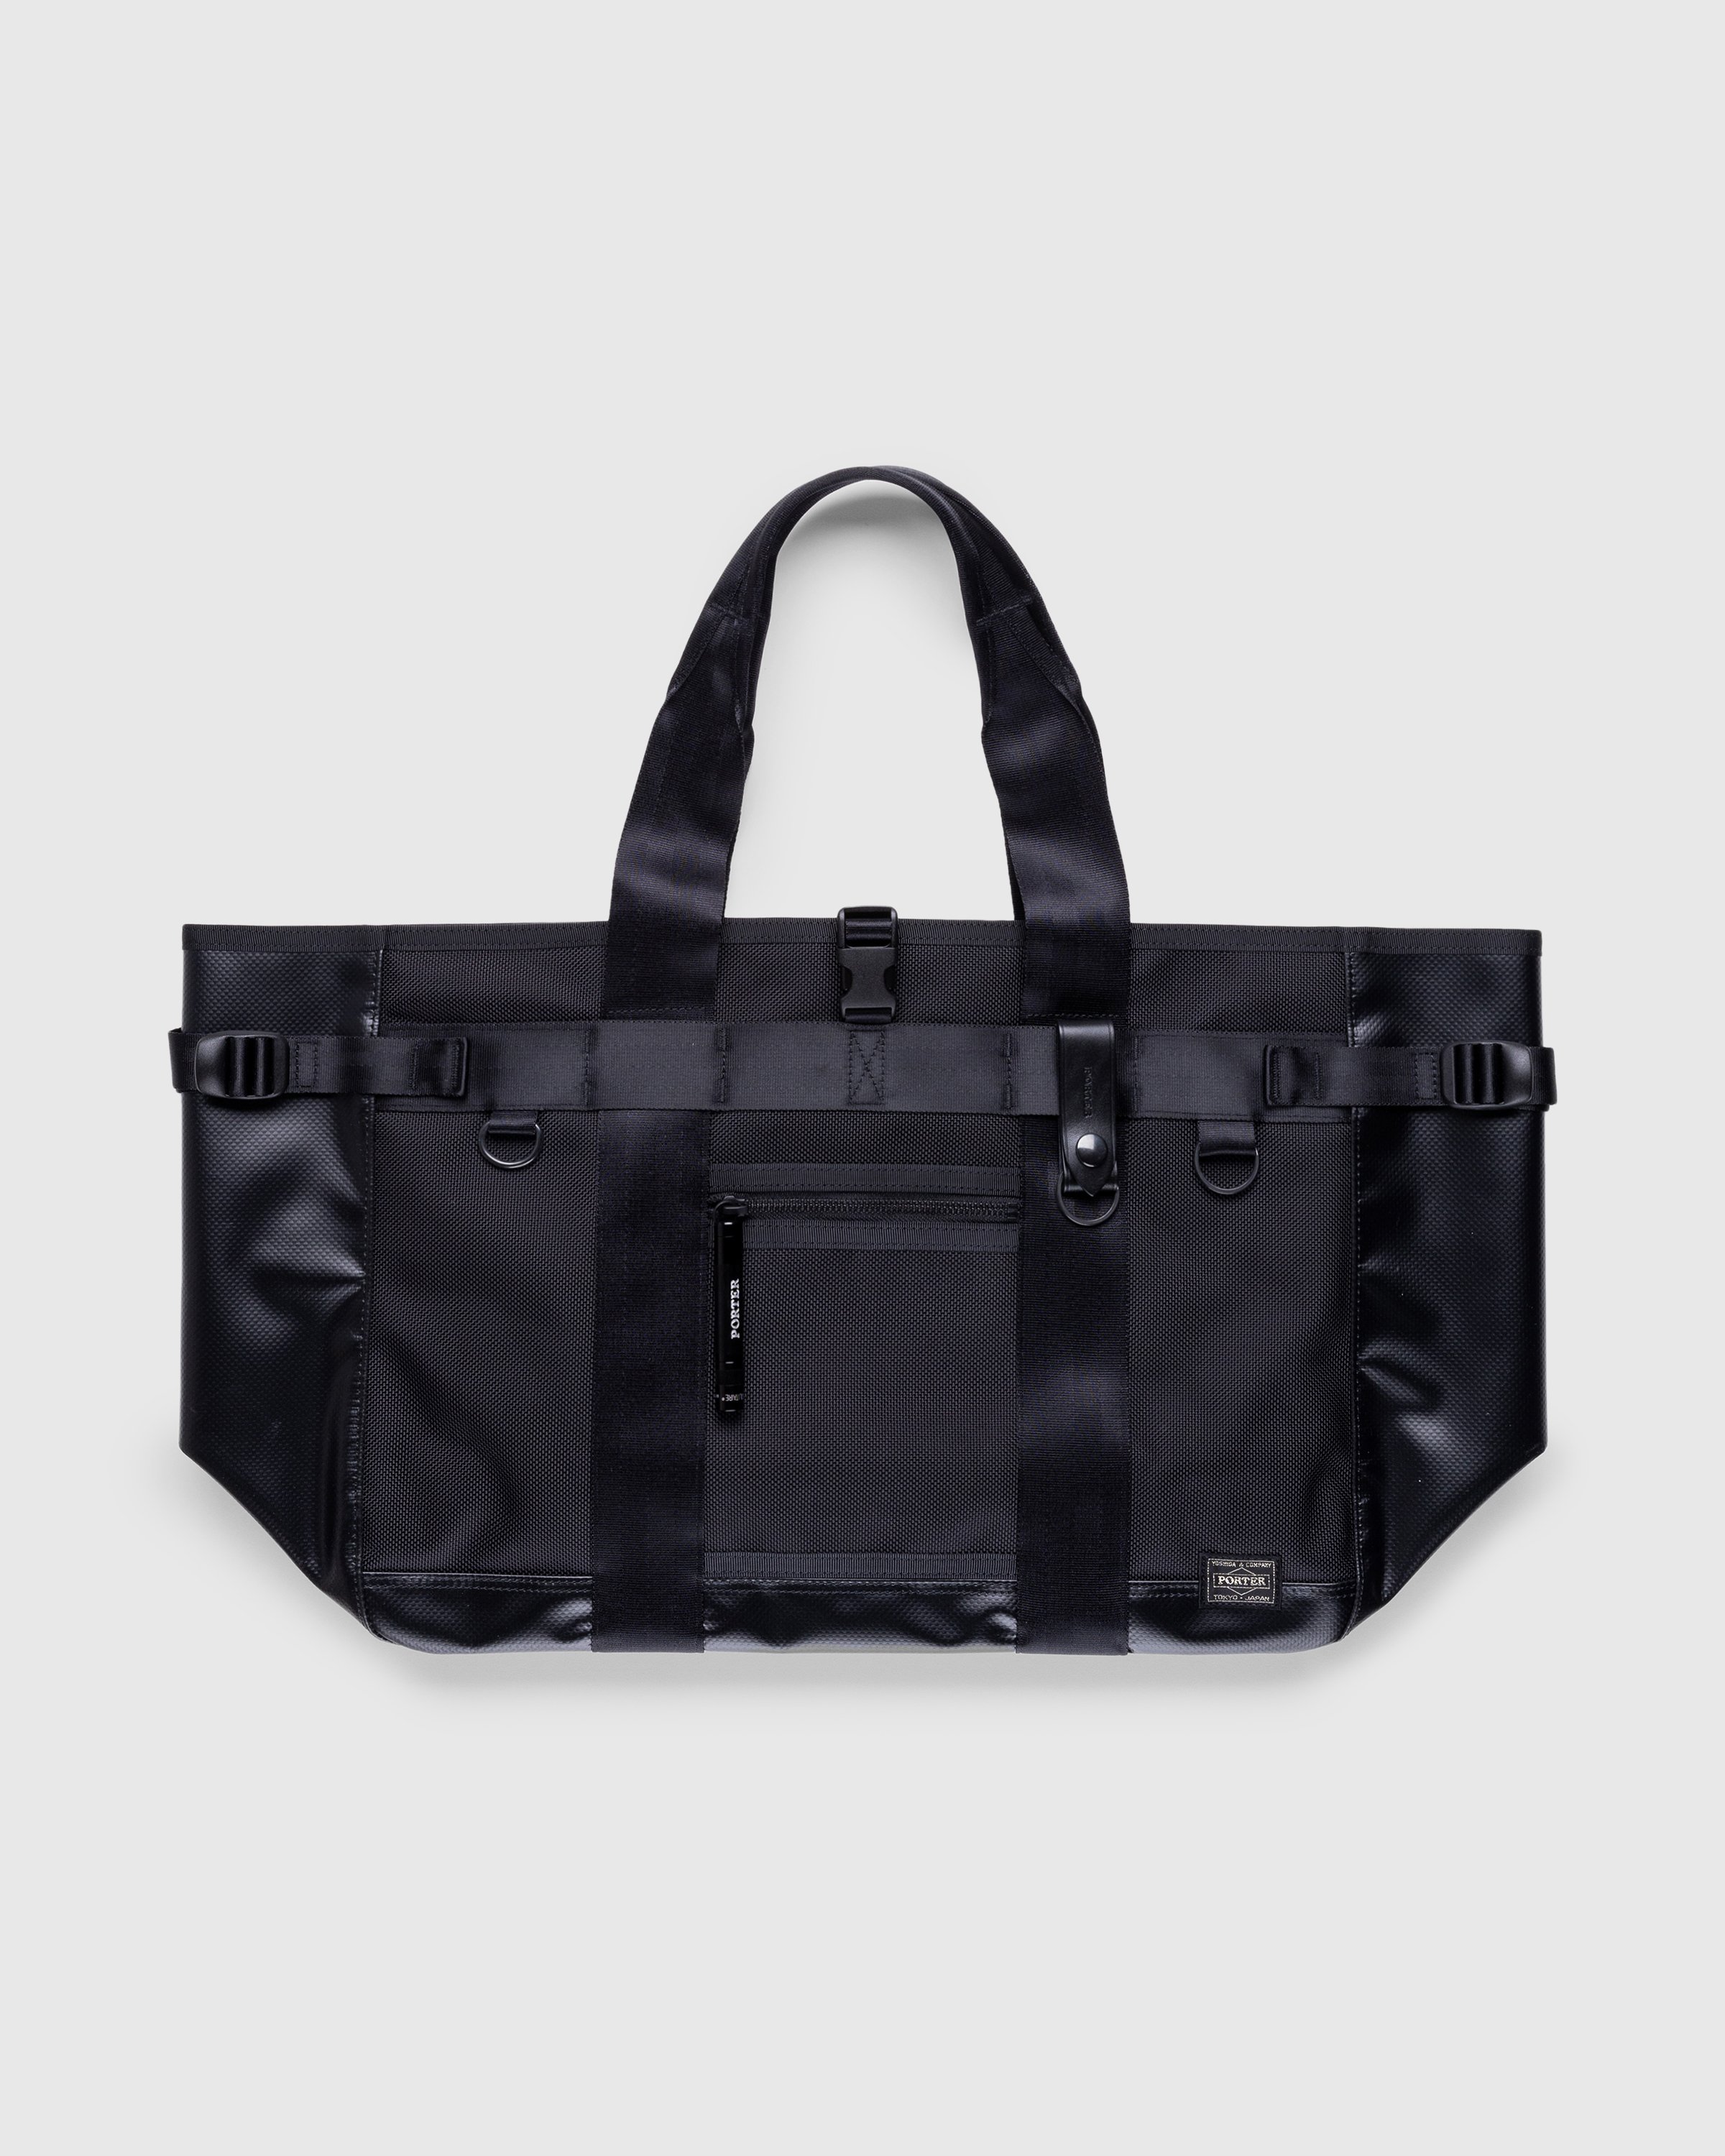 Porter-Yoshida & Co. - Heat Tote Bag Black - Accessories - Black - Image 1